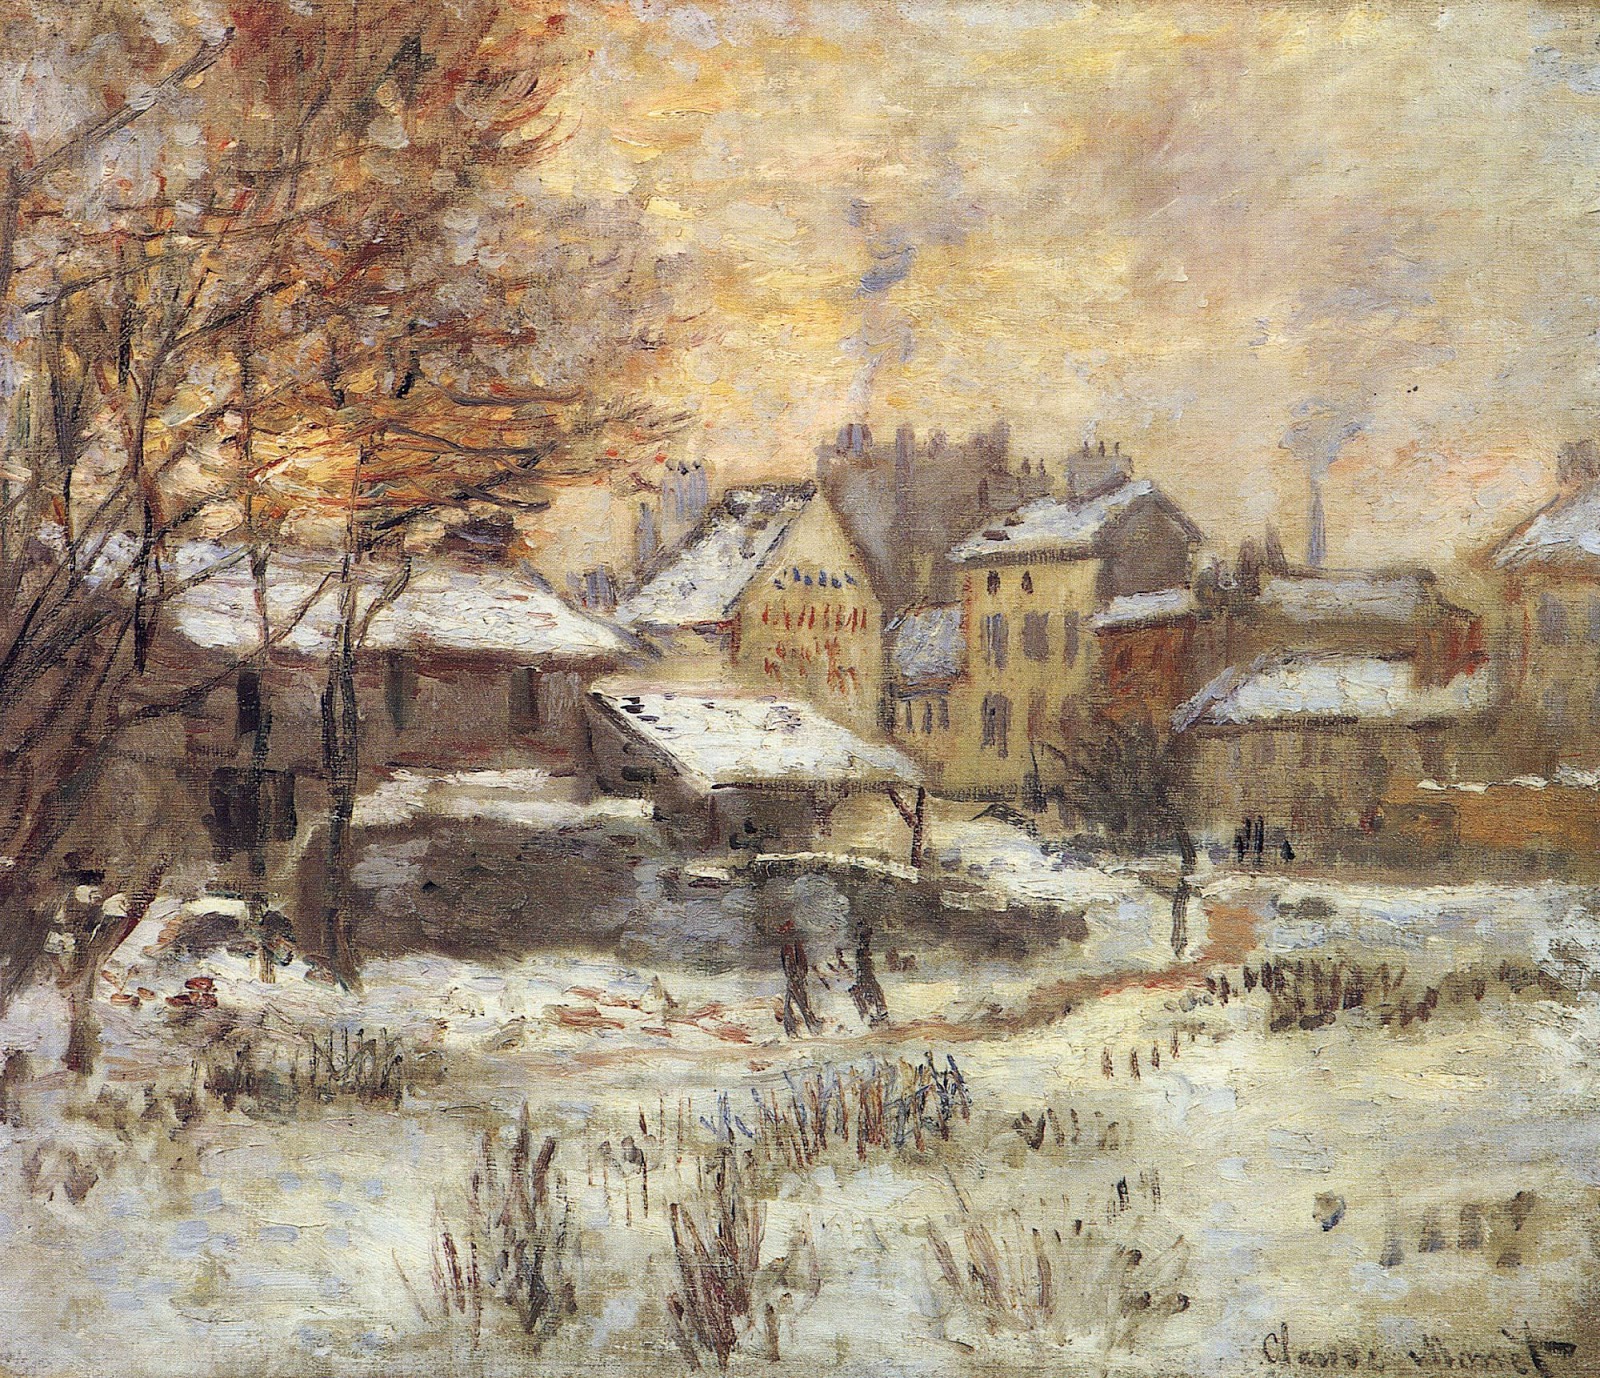 Claude+Monet-1840-1926 (64).jpg